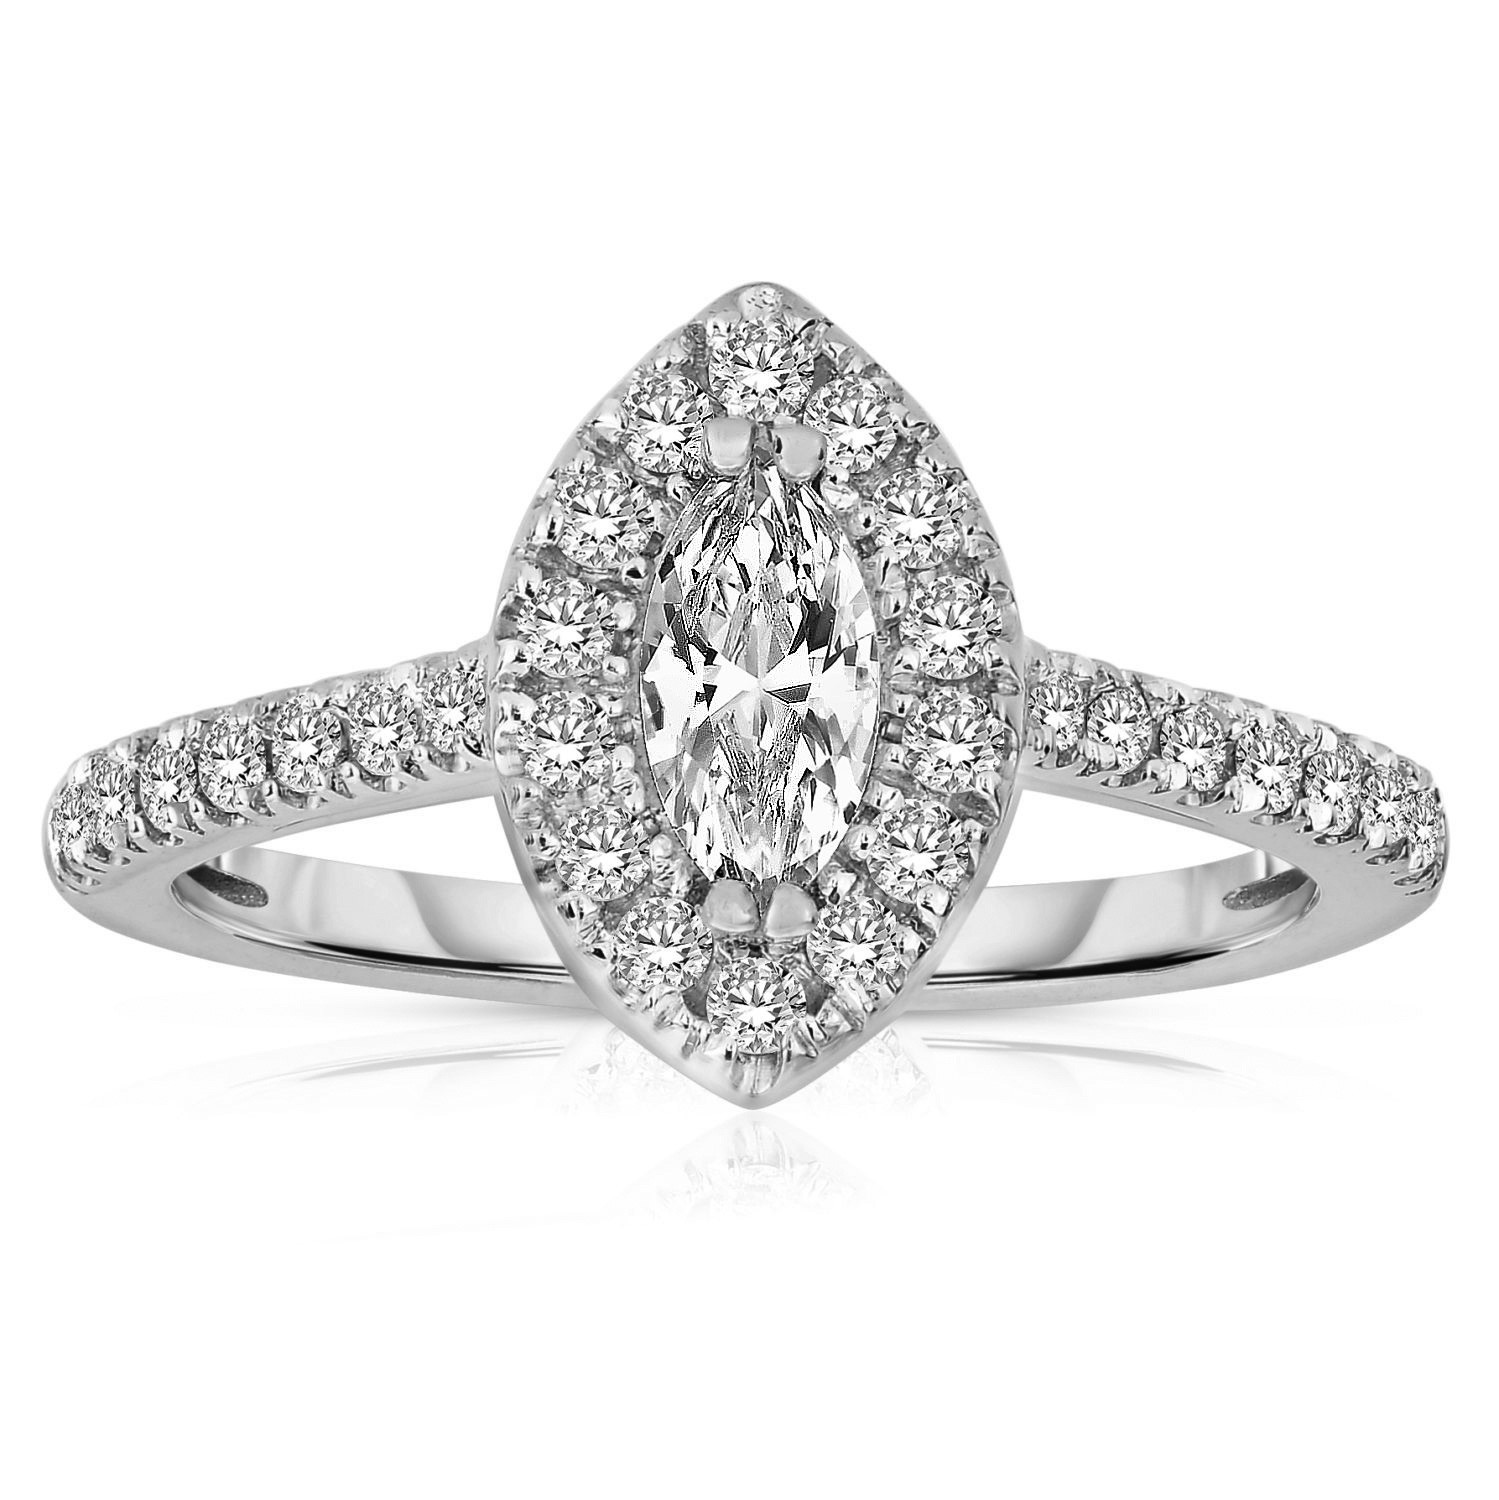 Marquise Cut Diamond Engagement Ring
 Half Carat Marquise cut Halo Diamond Engagement Ring in